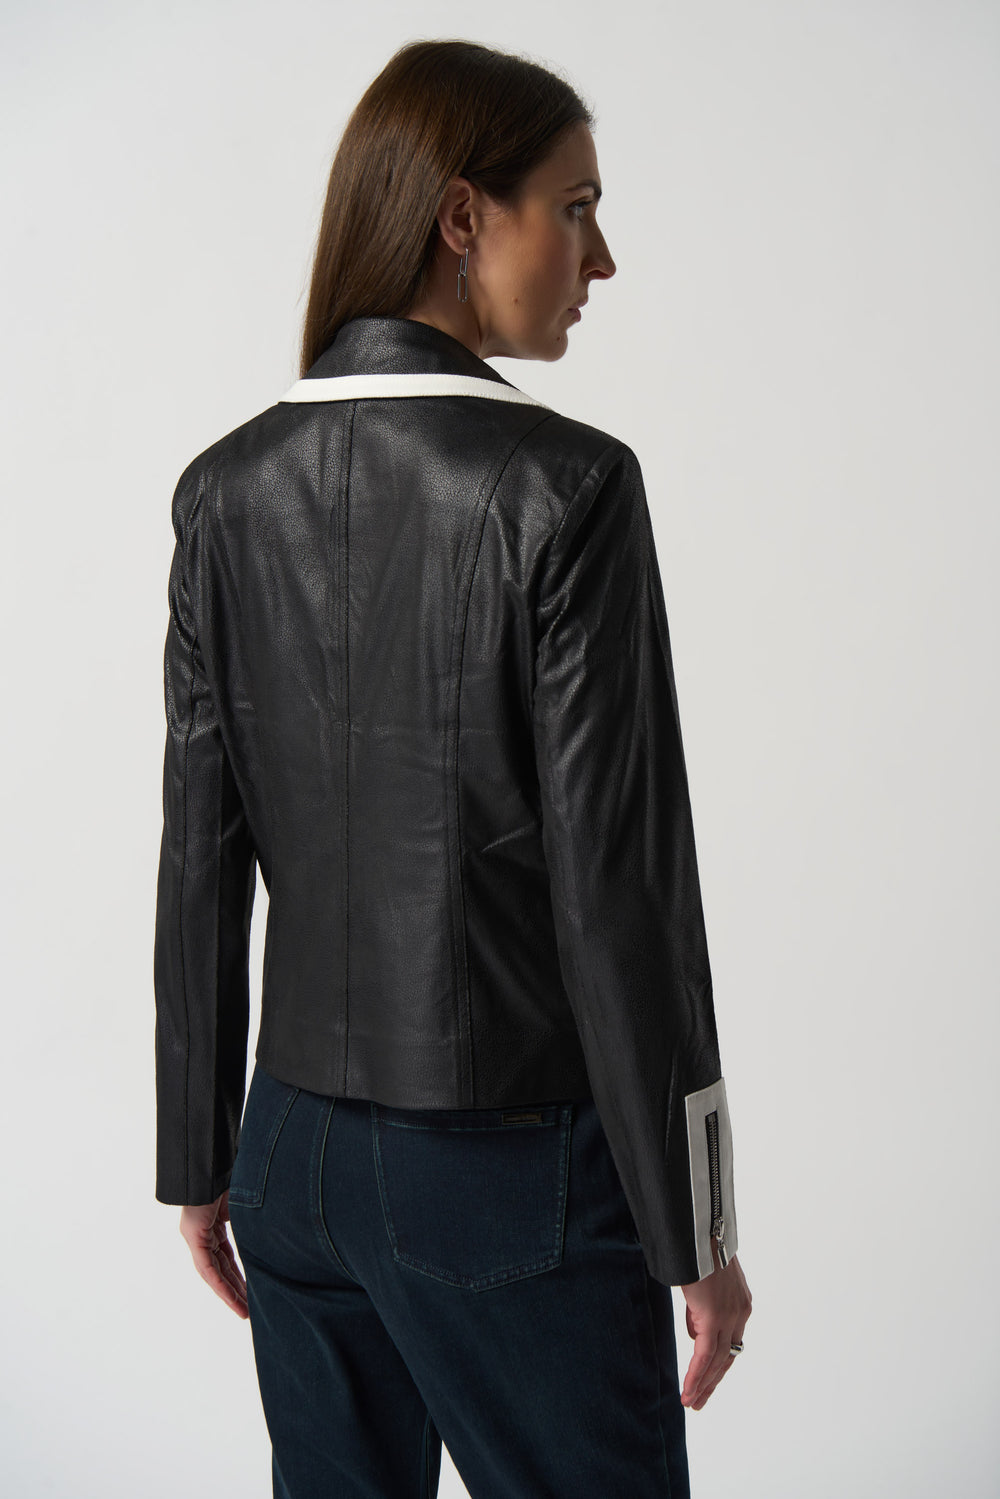 Joseph Ribkoff Fall 2023 women's casual faux suede vegan black moto blazer jacket - back